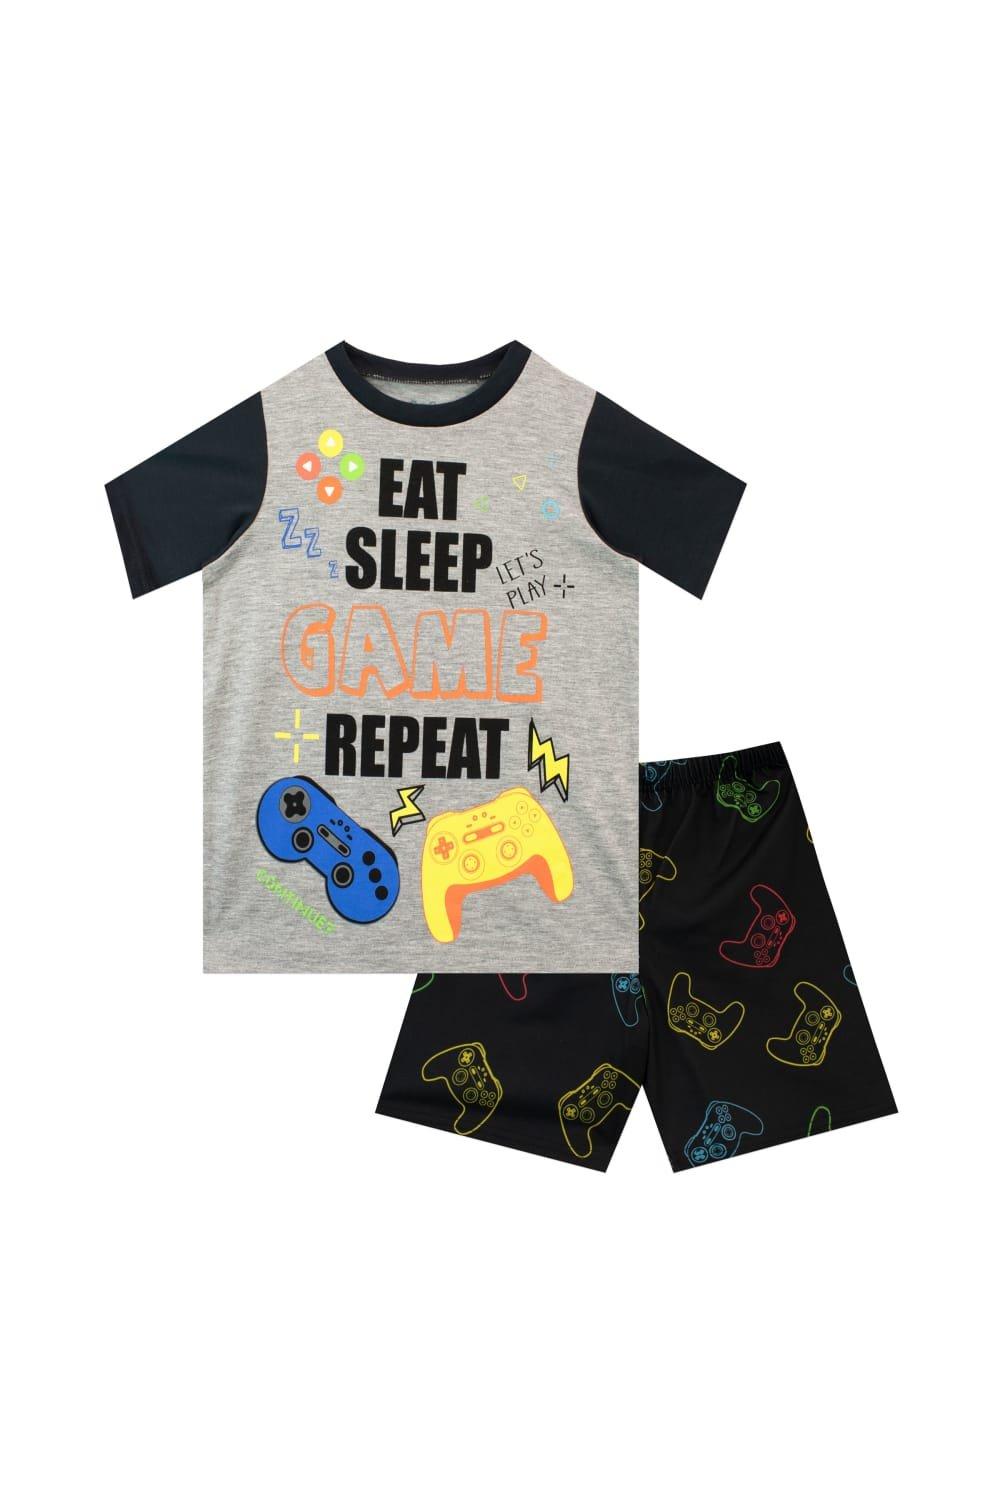 Eat Sleep Game Short Pyjamas